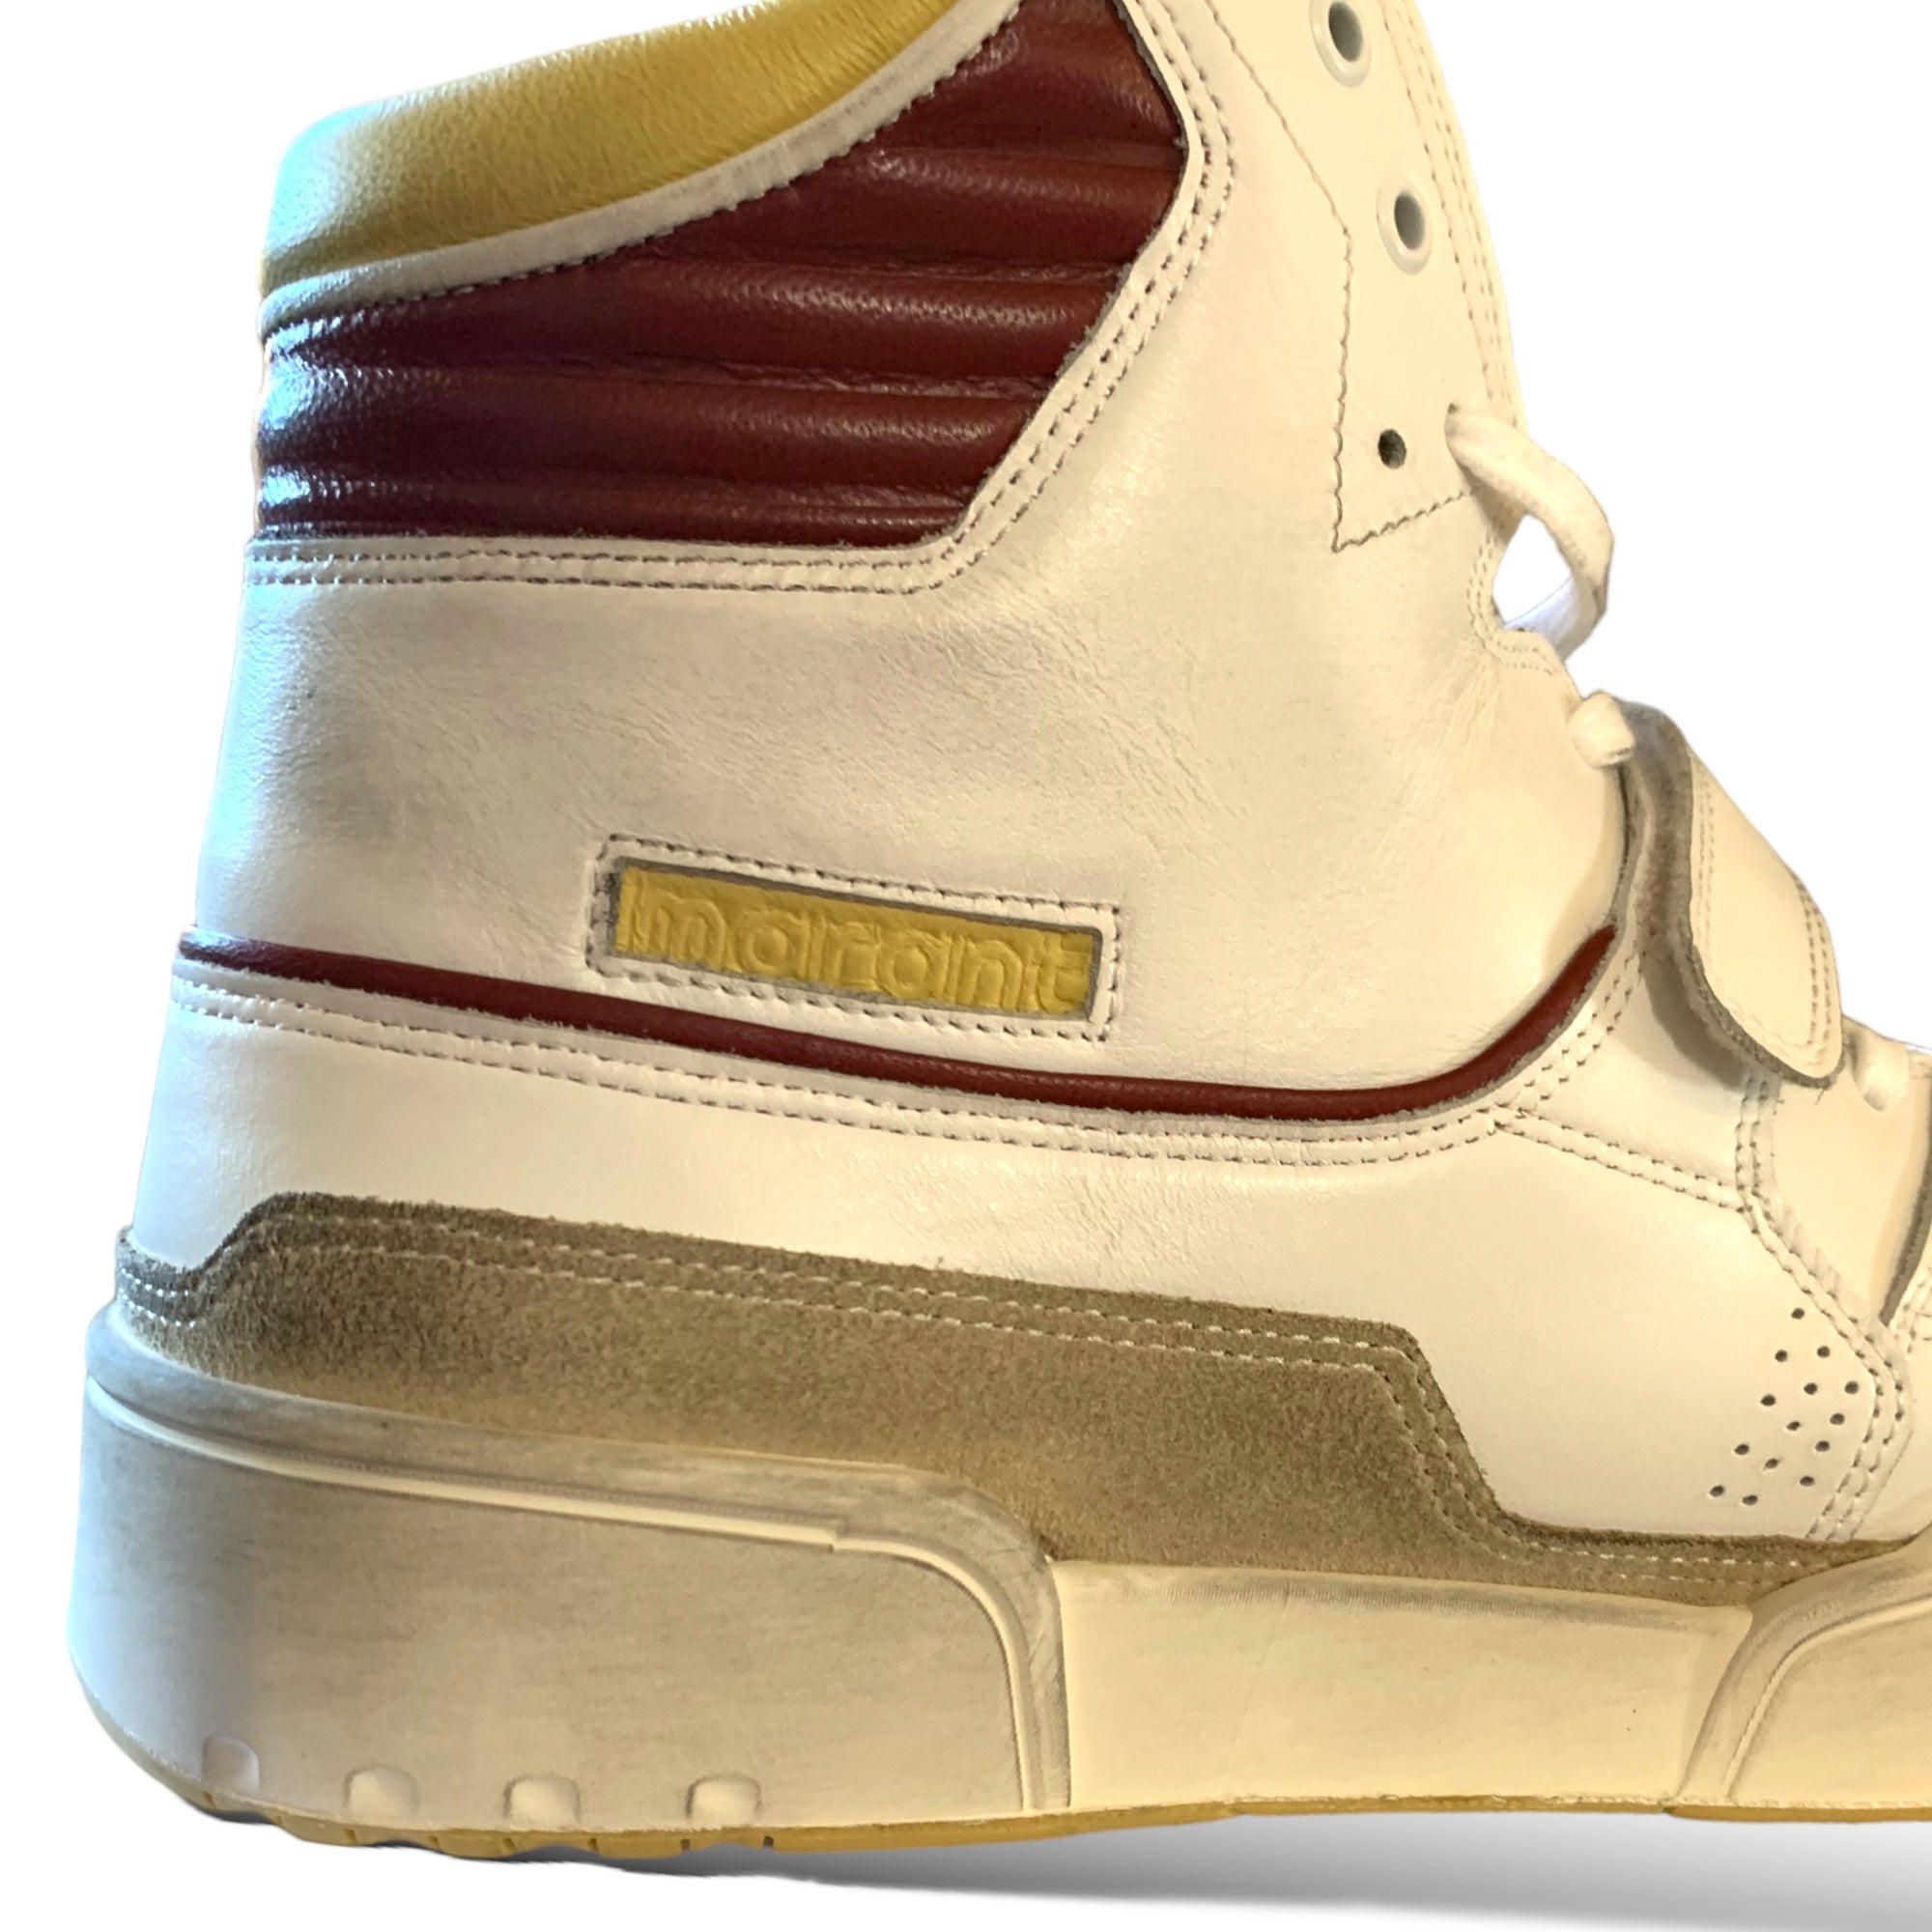 ISABEL MARANT Men's Alsee high-top sneakers |Size: 44|